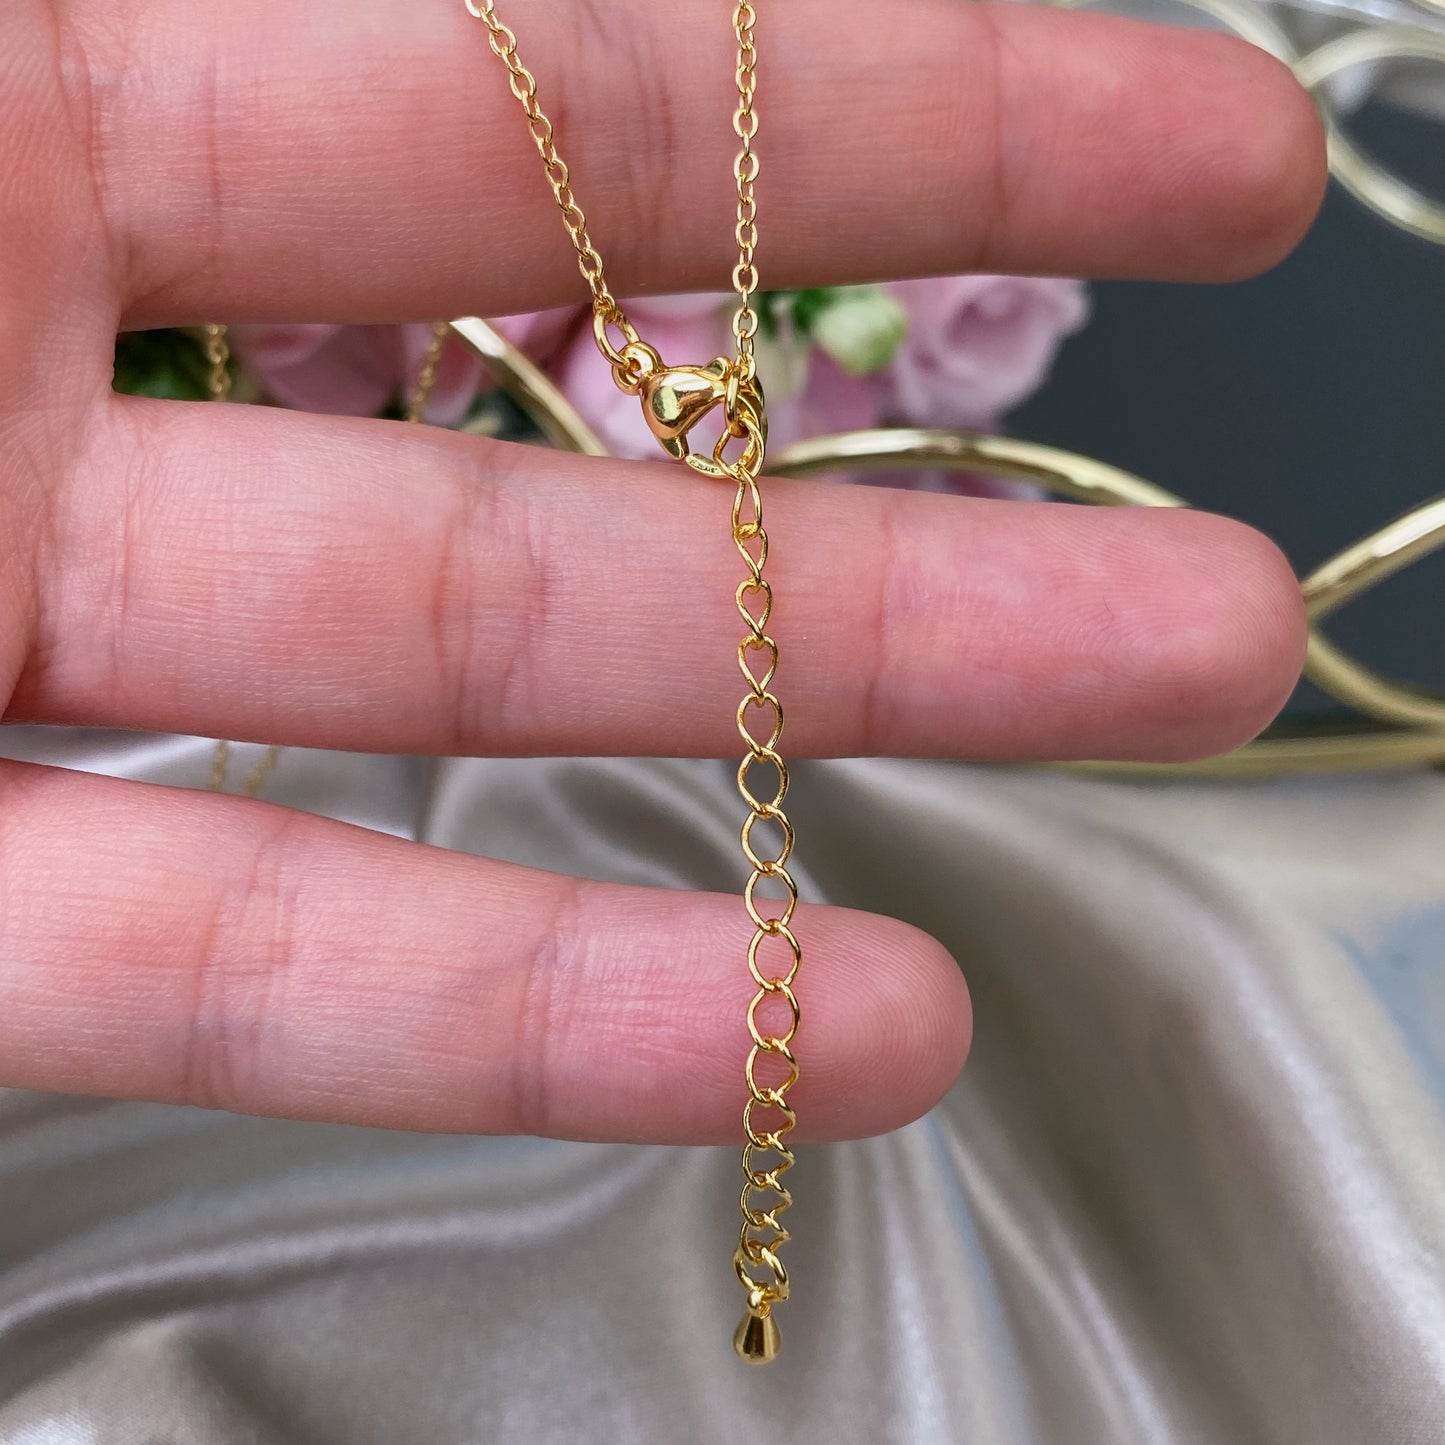 River Pearls necklace "Horseshoe" (adjustable length 38cm+5cm)